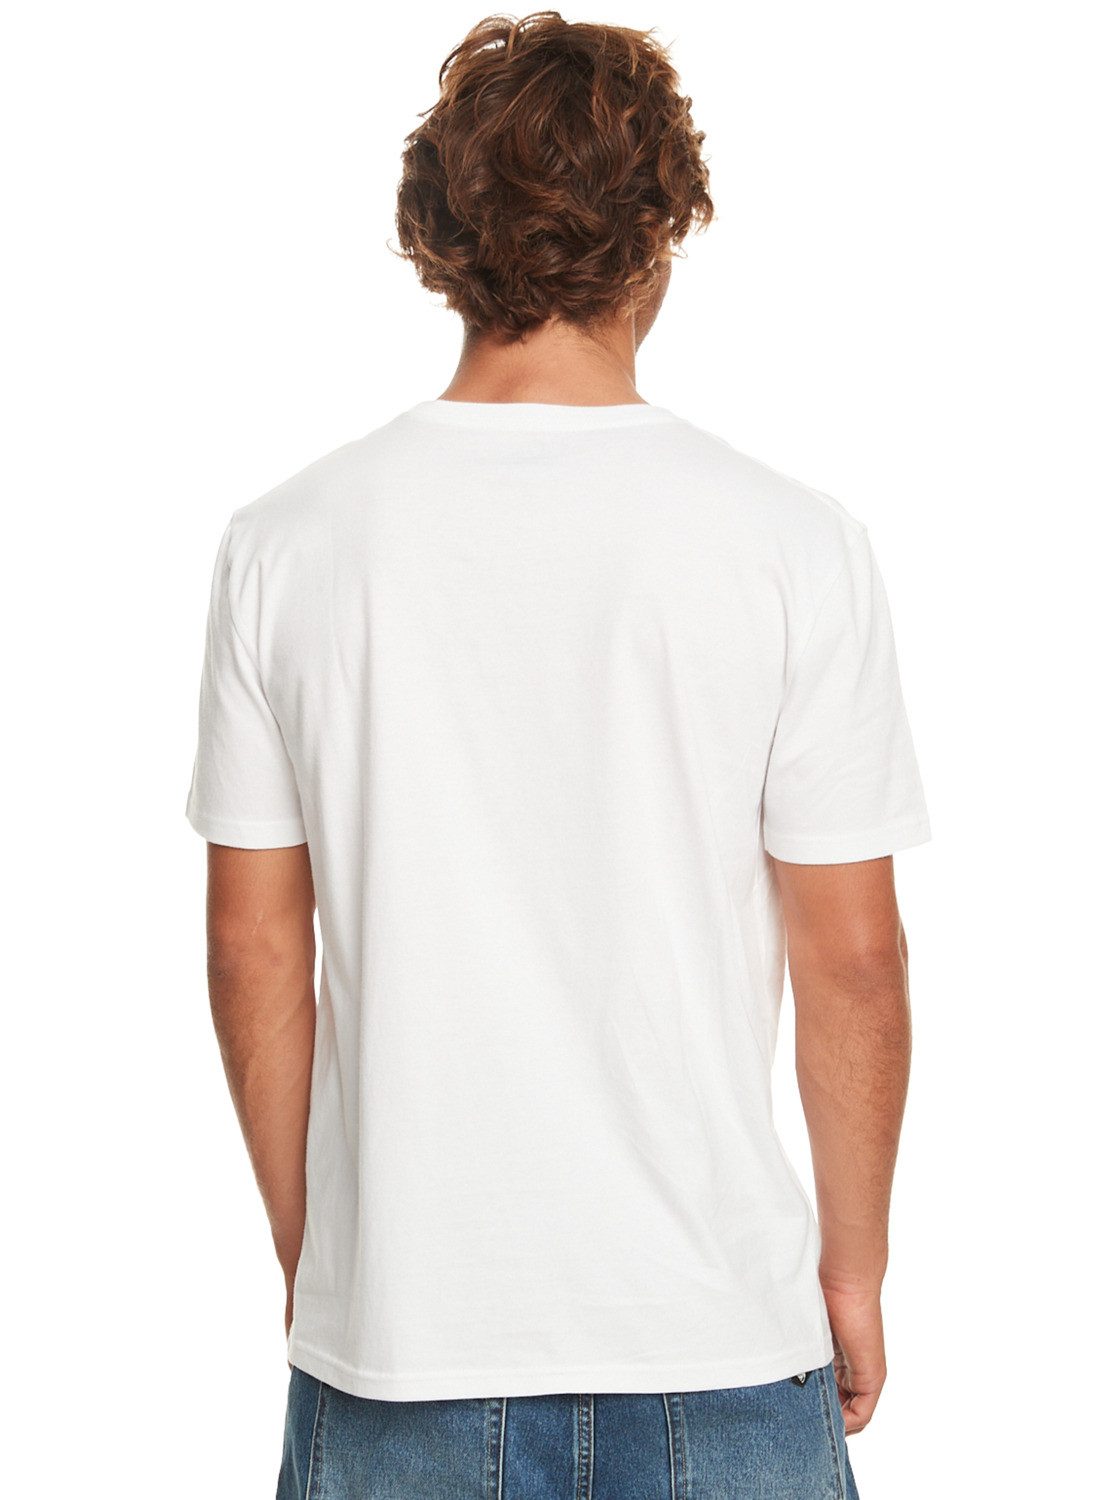 Quiksilver T-Shirt Circle Trim White